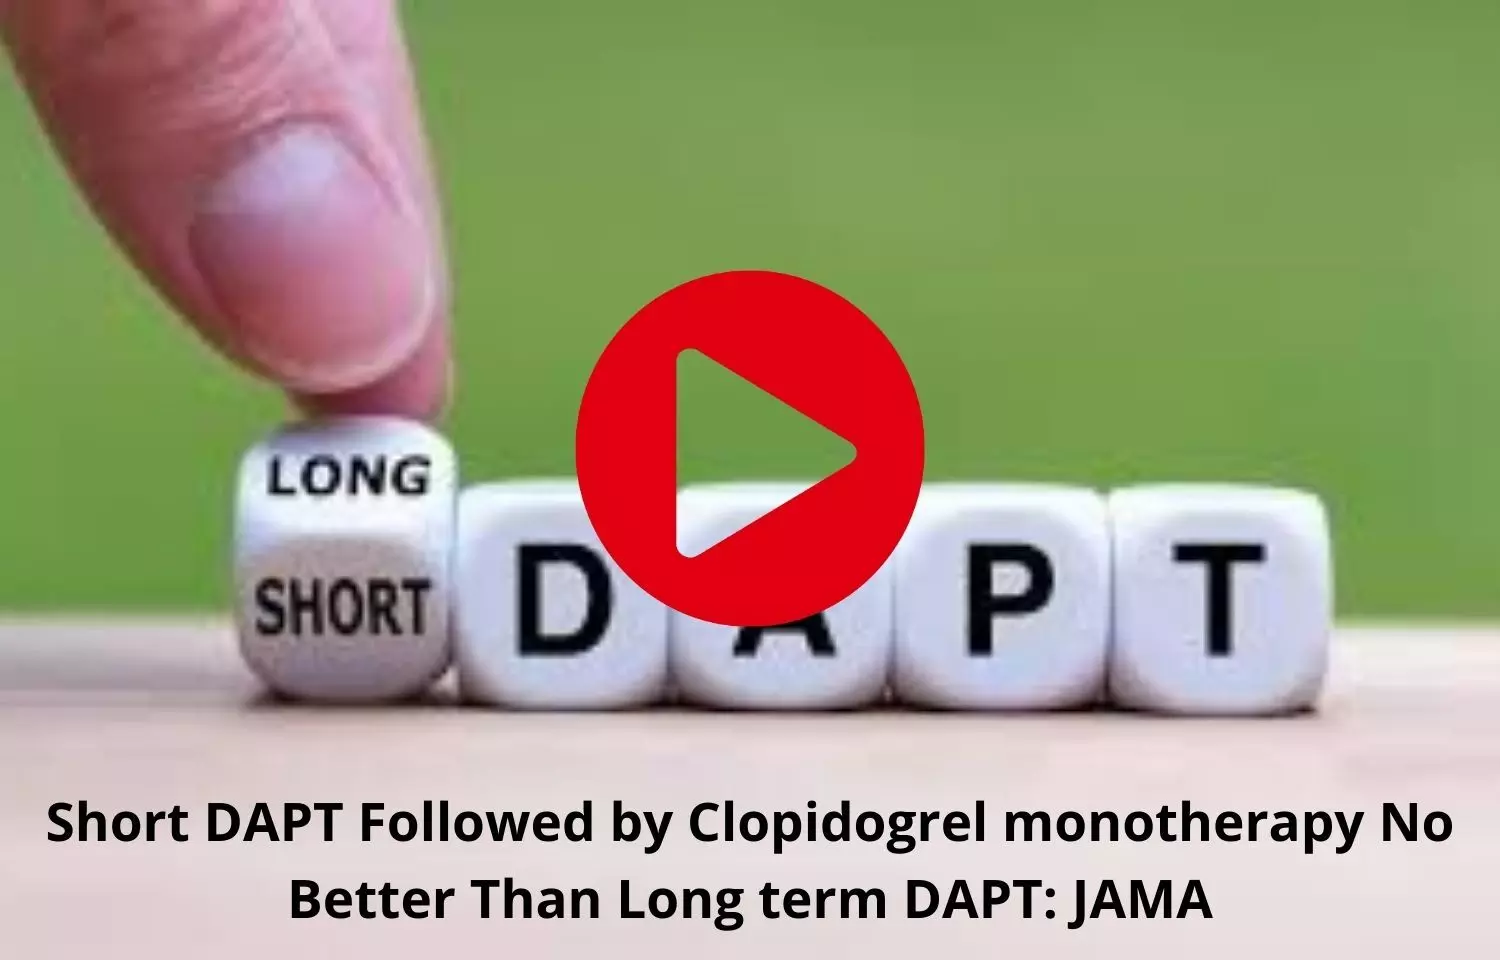 Short dapt with clopidogrel has similar  effects that of long term dapt